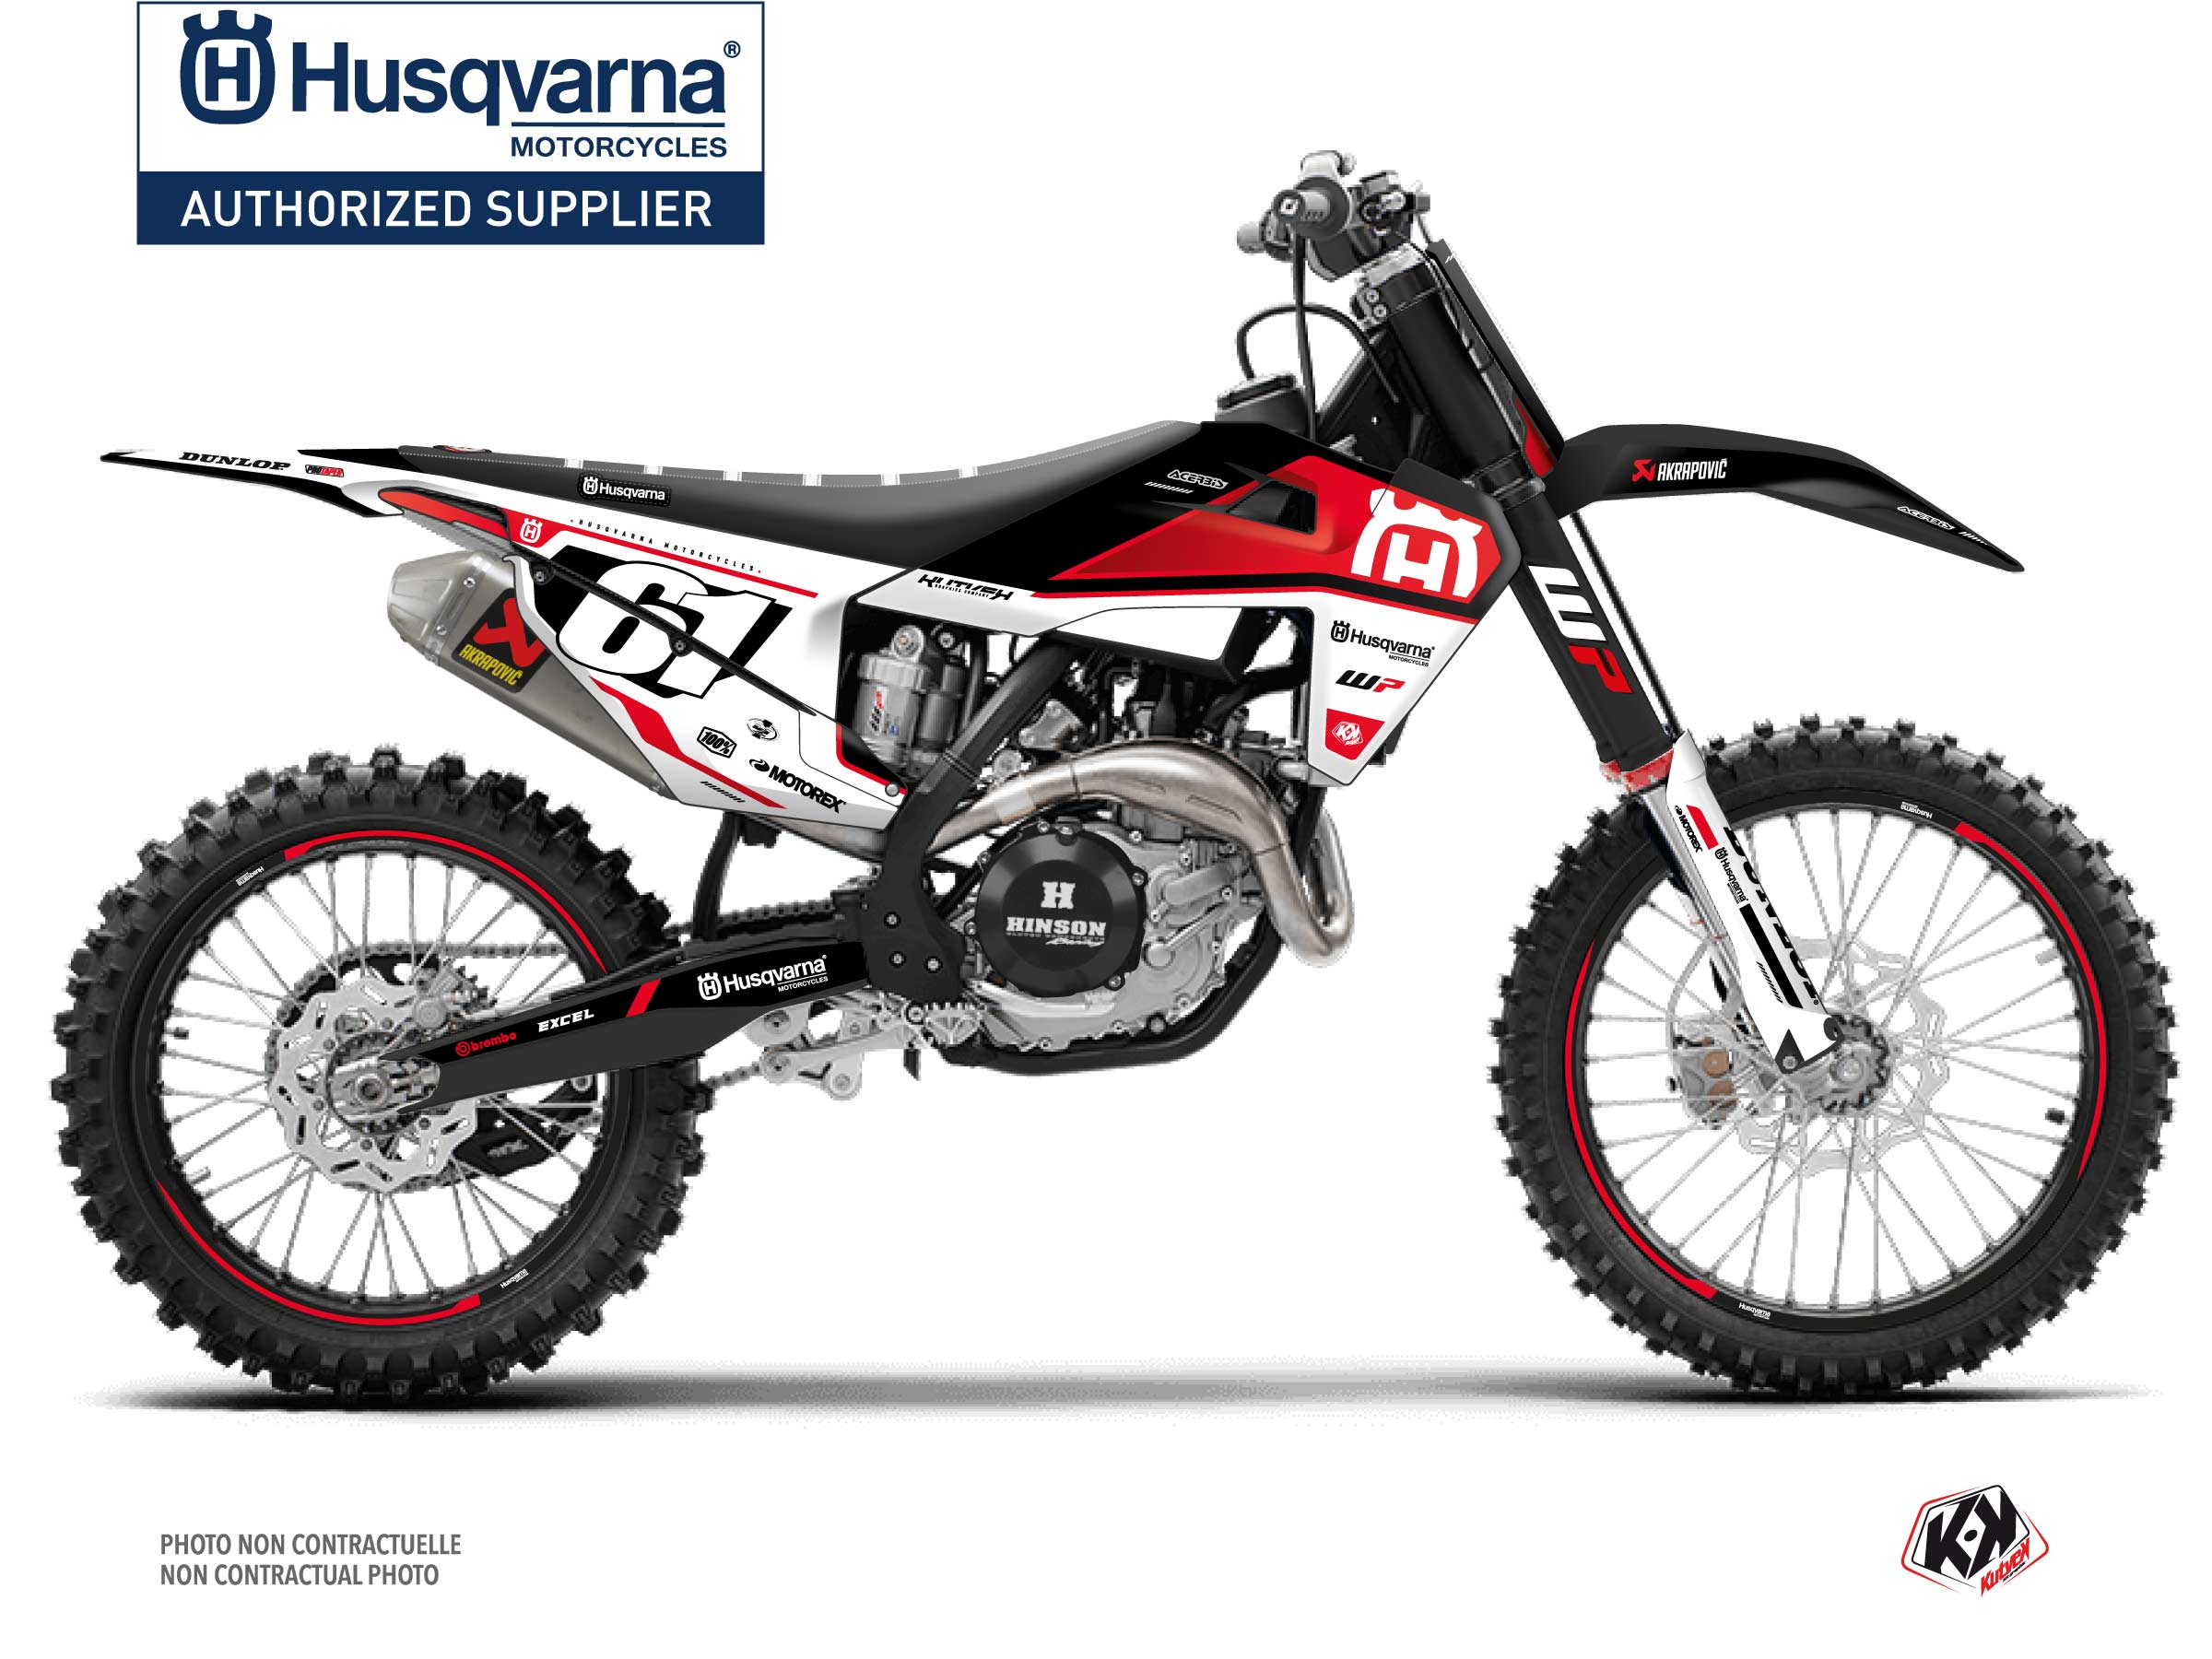 Husqvarna FC 250 Dirt Bike D-SKT Graphic Kit Red